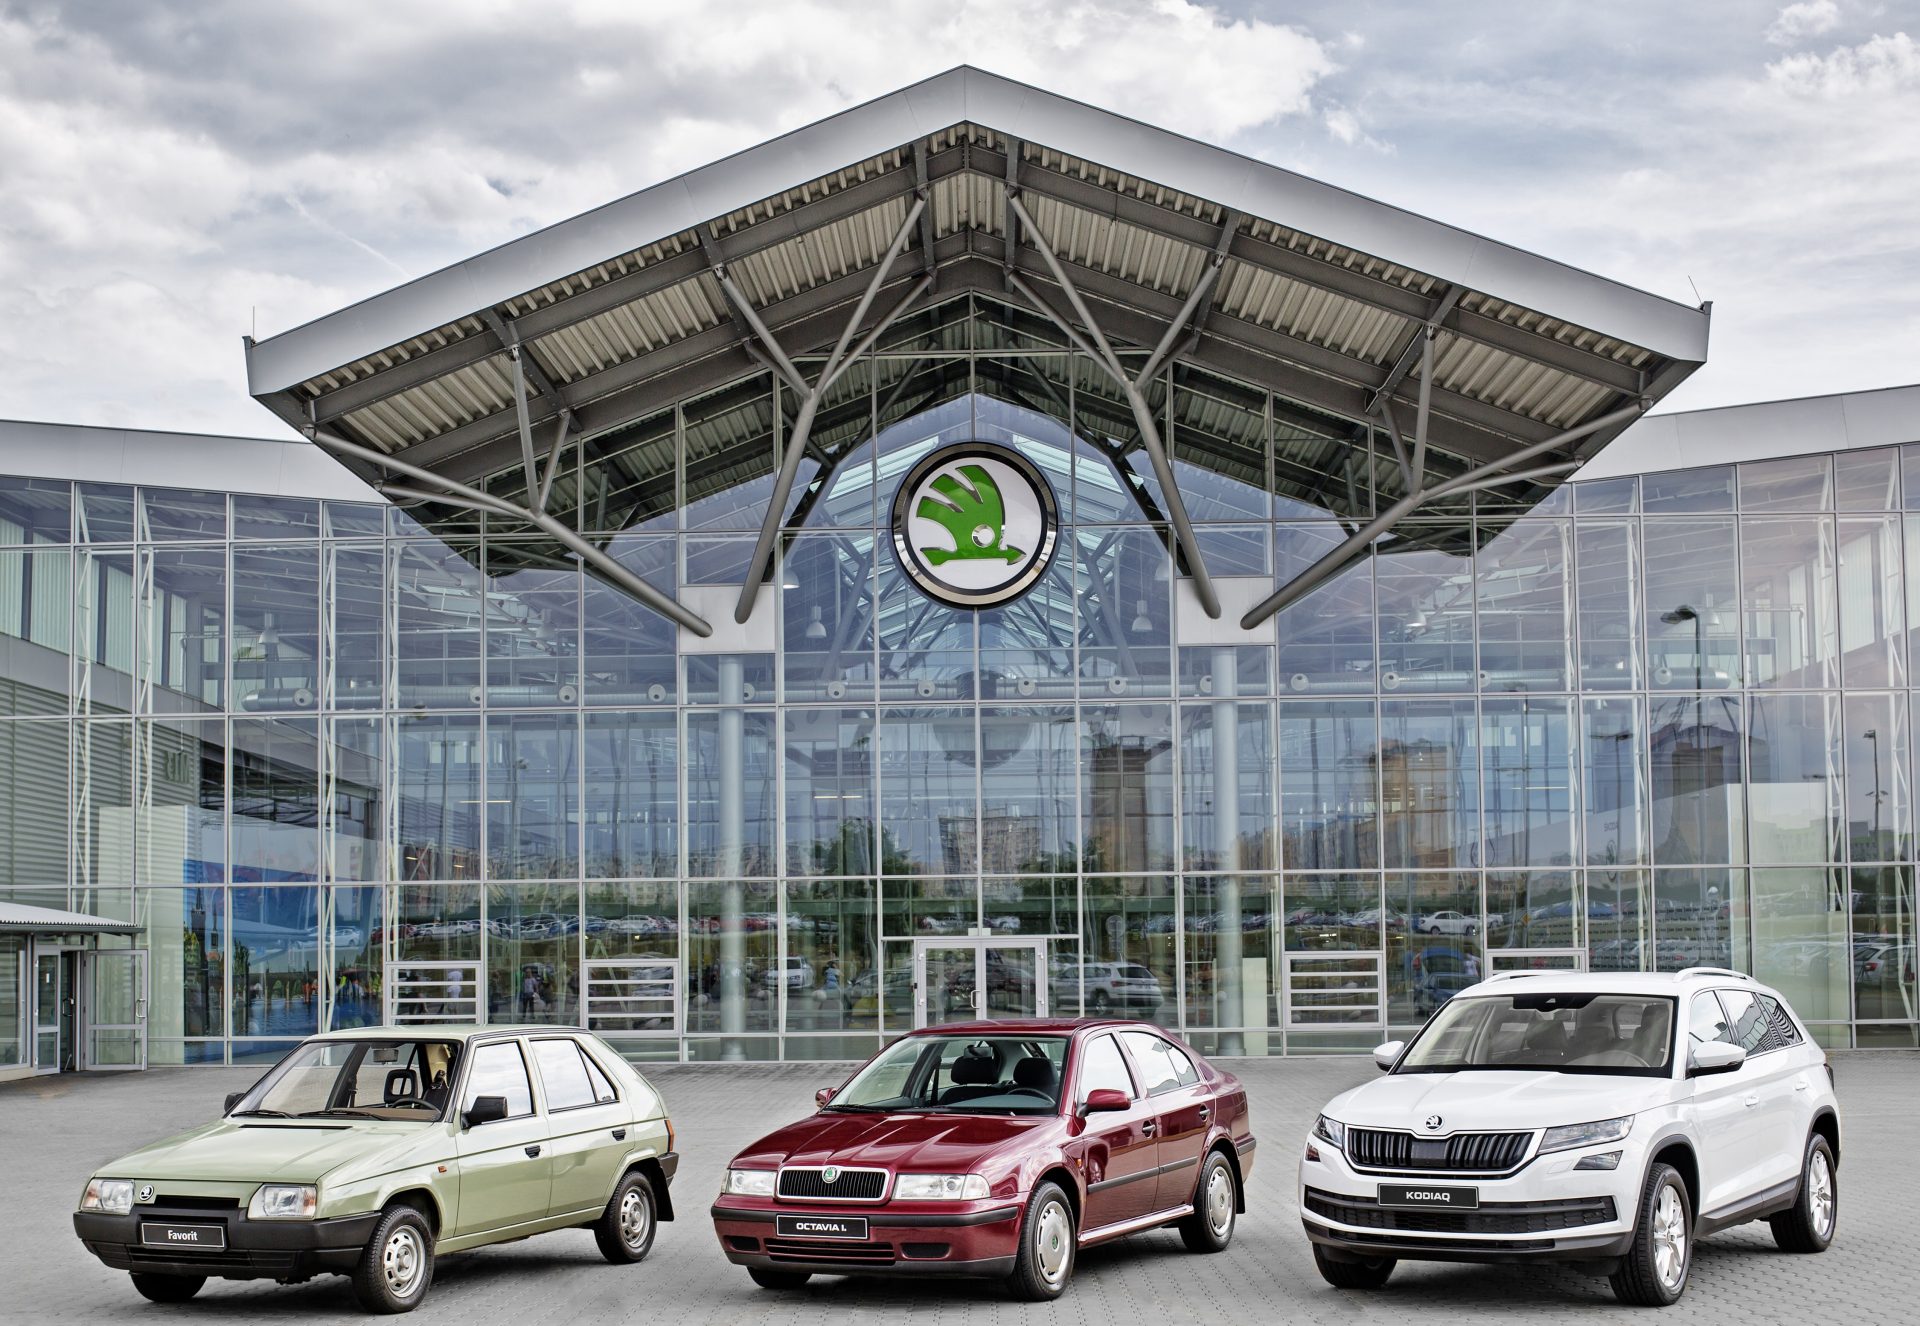 Škoda's profit fell last year, it announced investments of 2.5 billion euros